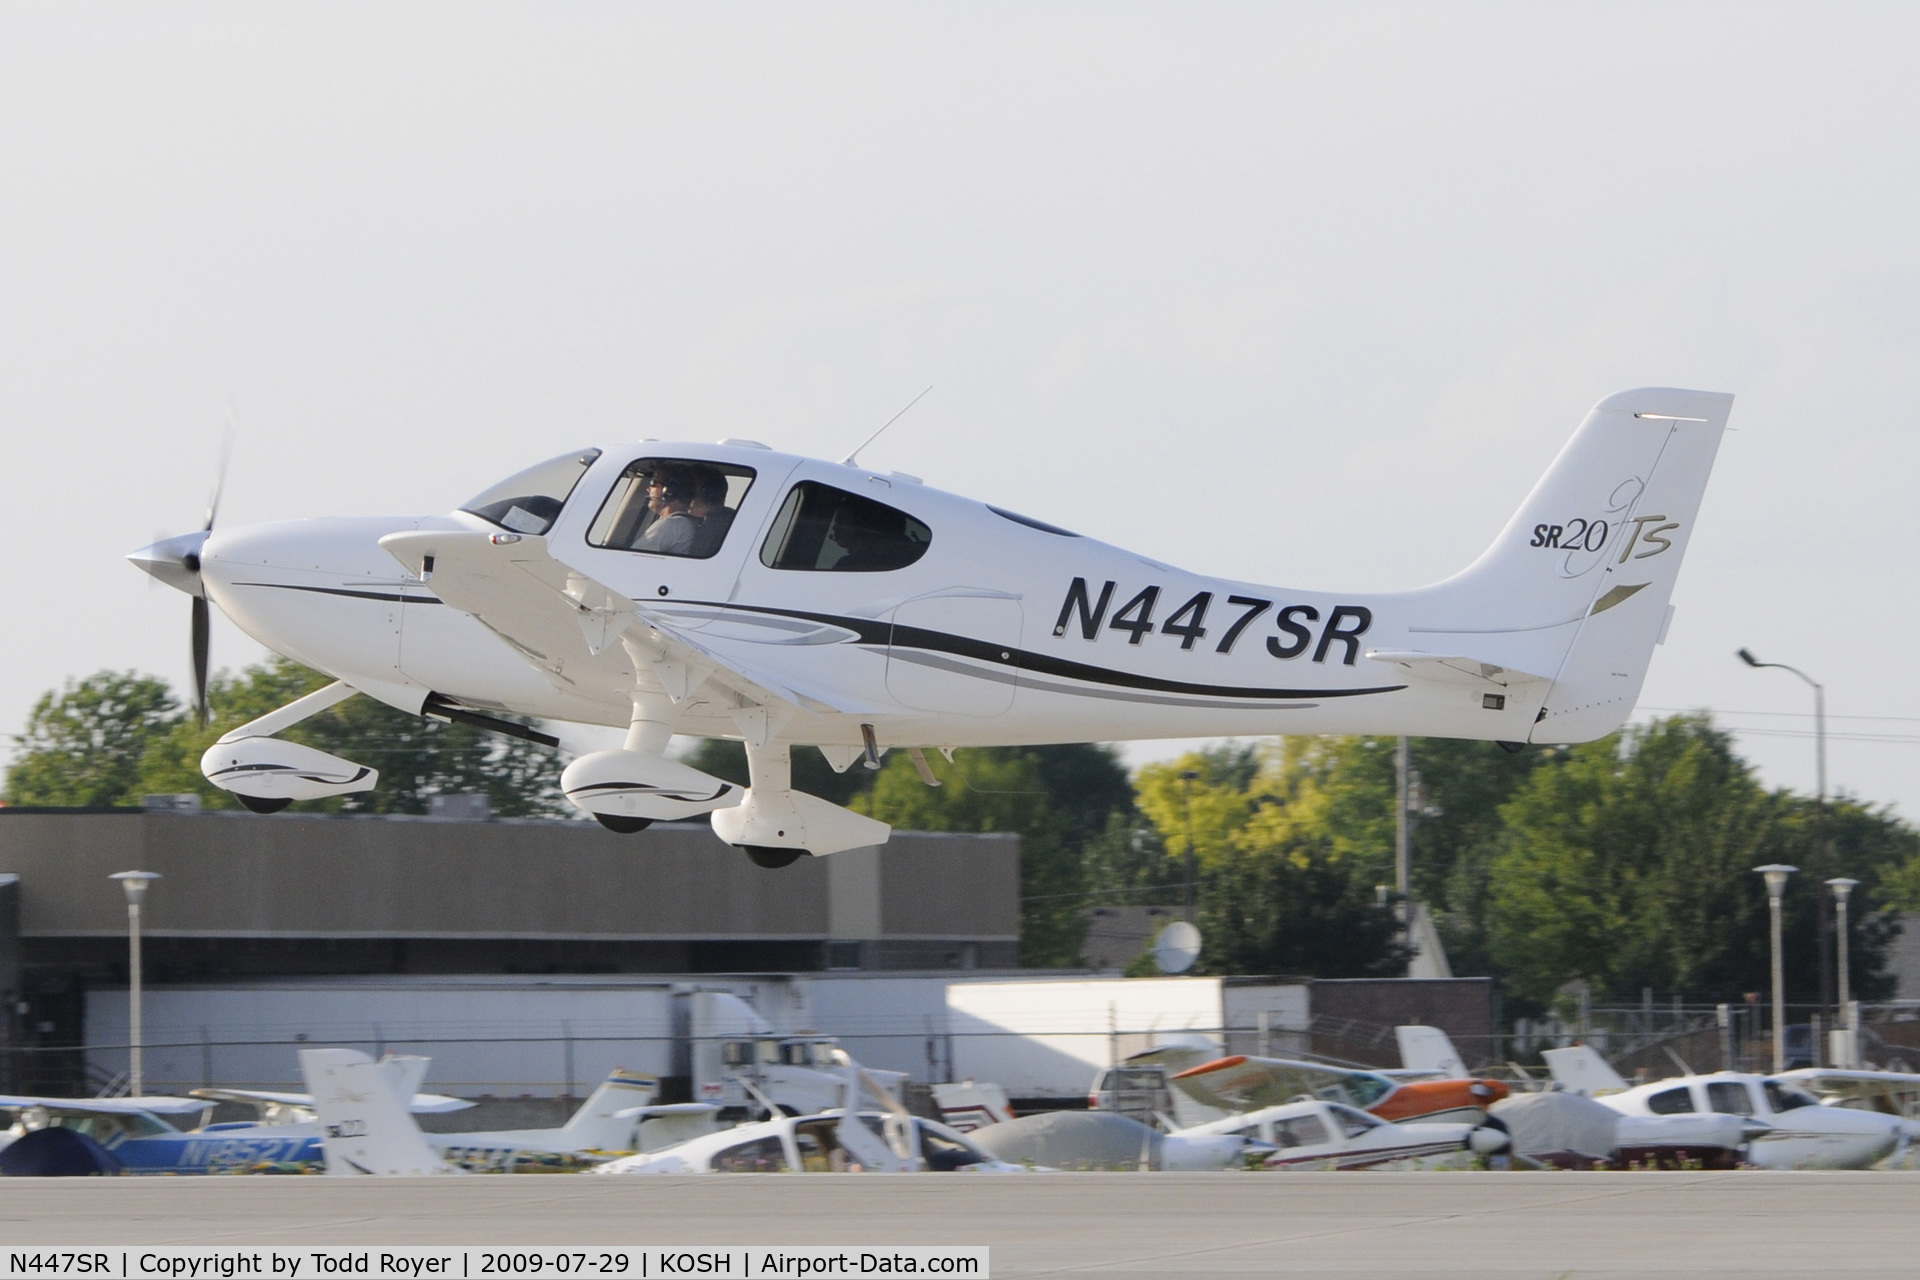 N447SR, 2006 Cirrus SR20 GTS C/N 1717, Oshkosh EAA Fly-in 2009